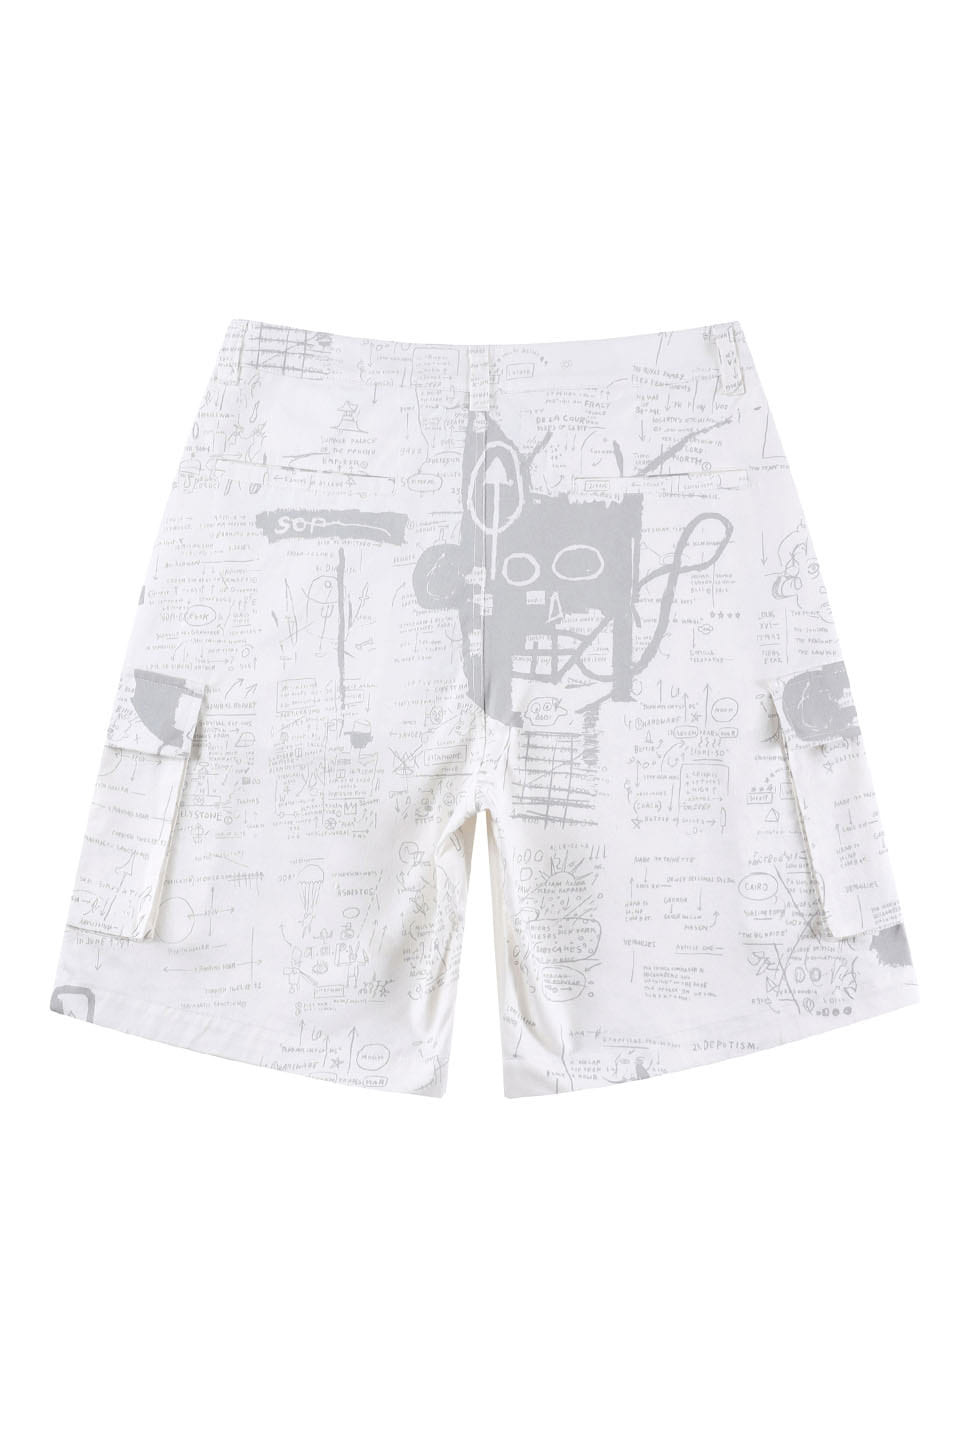 Basquiat Tuxedo Shorts